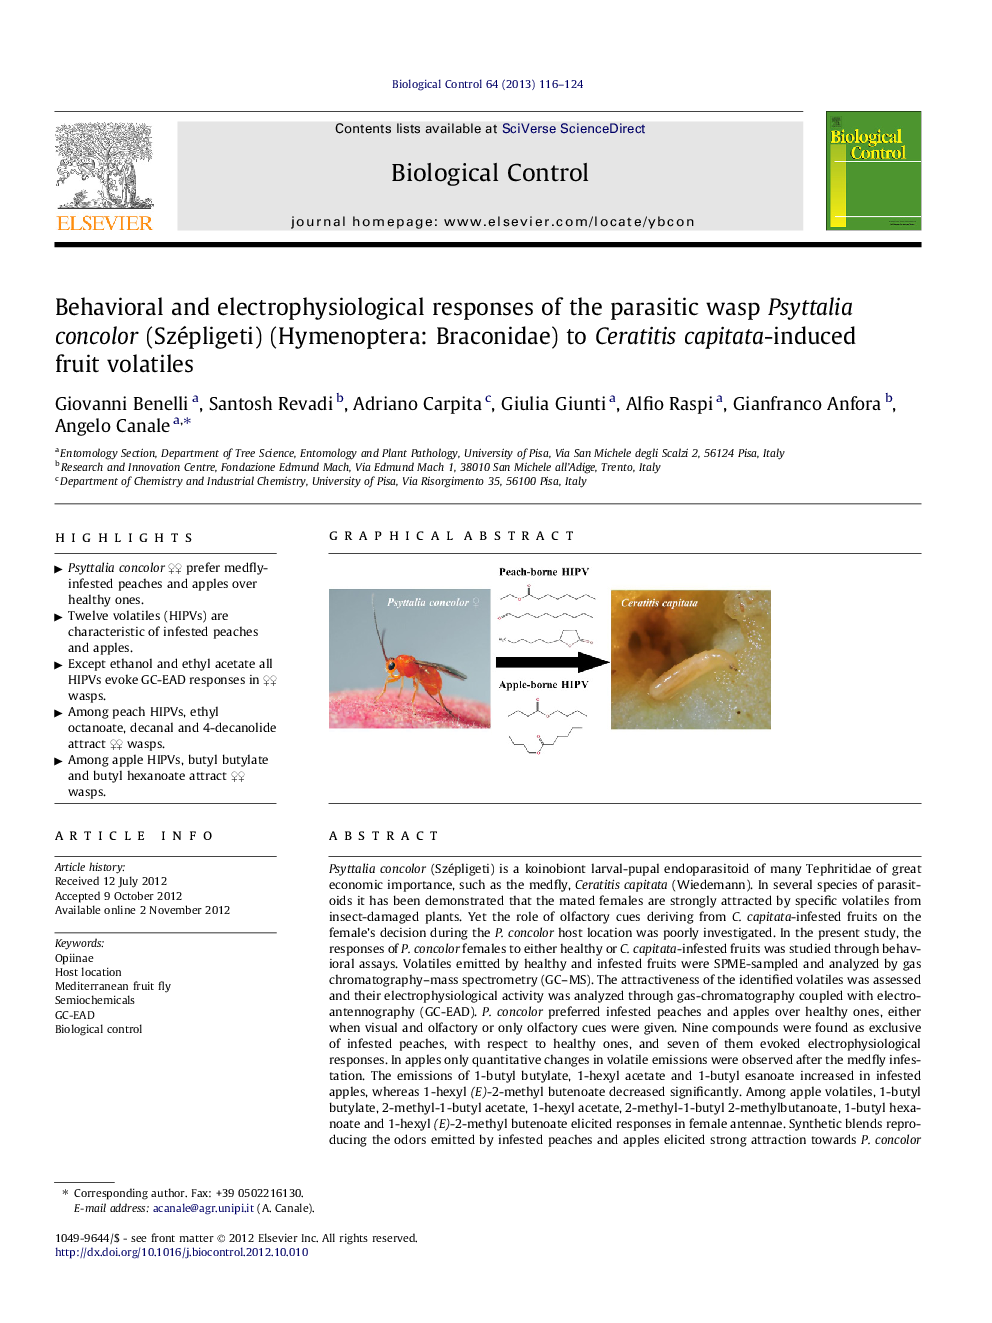 Behavioral and electrophysiological responses of the parasitic wasp Psyttalia concolor (Szépligeti) (Hymenoptera: Braconidae) to Ceratitis capitata-induced fruit volatiles